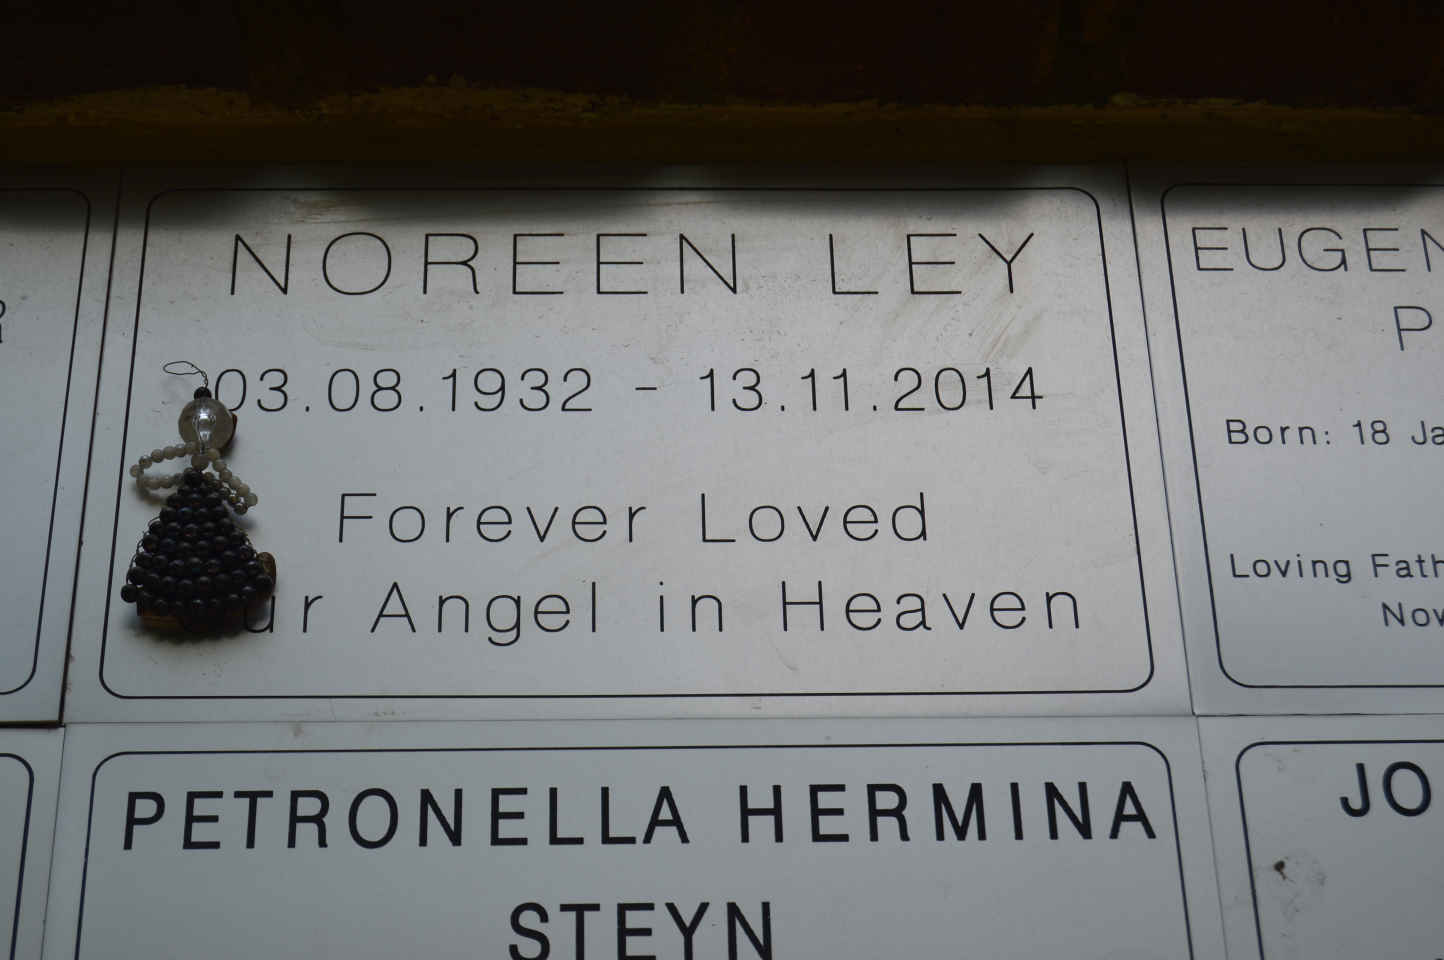 LEY Noreen 1932-2014